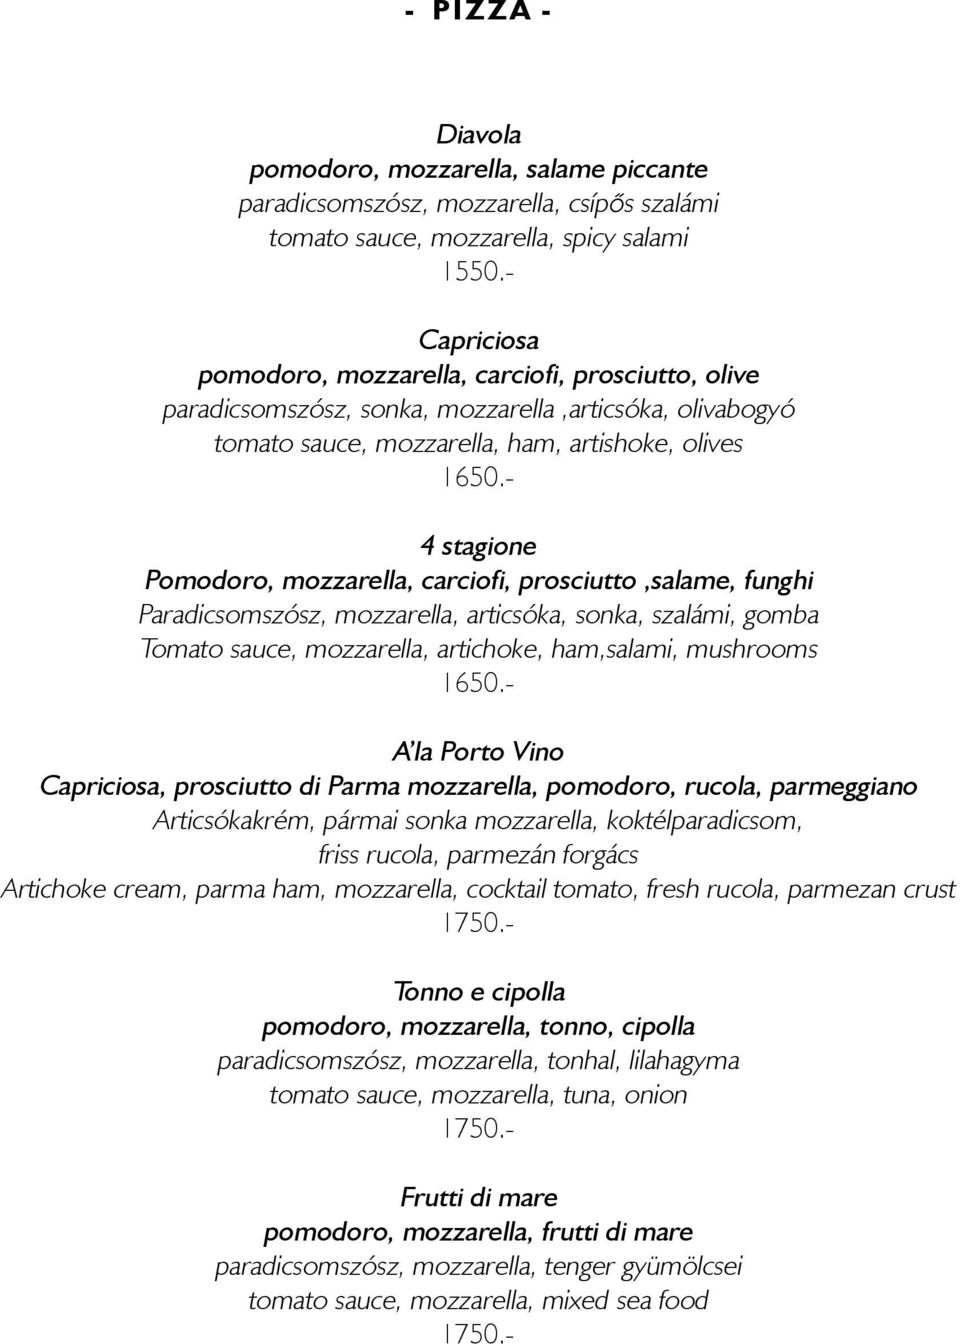 - 4 stagione Pomodoro, mozzarella, carciofi, prosciutto,salame, funghi Paradicsomszķsz, mozzarella, articsķka, sonka, szalámi, gomba Tomato sauce, mozzarella, artichoke, ham,salami, mushrooms 1650.